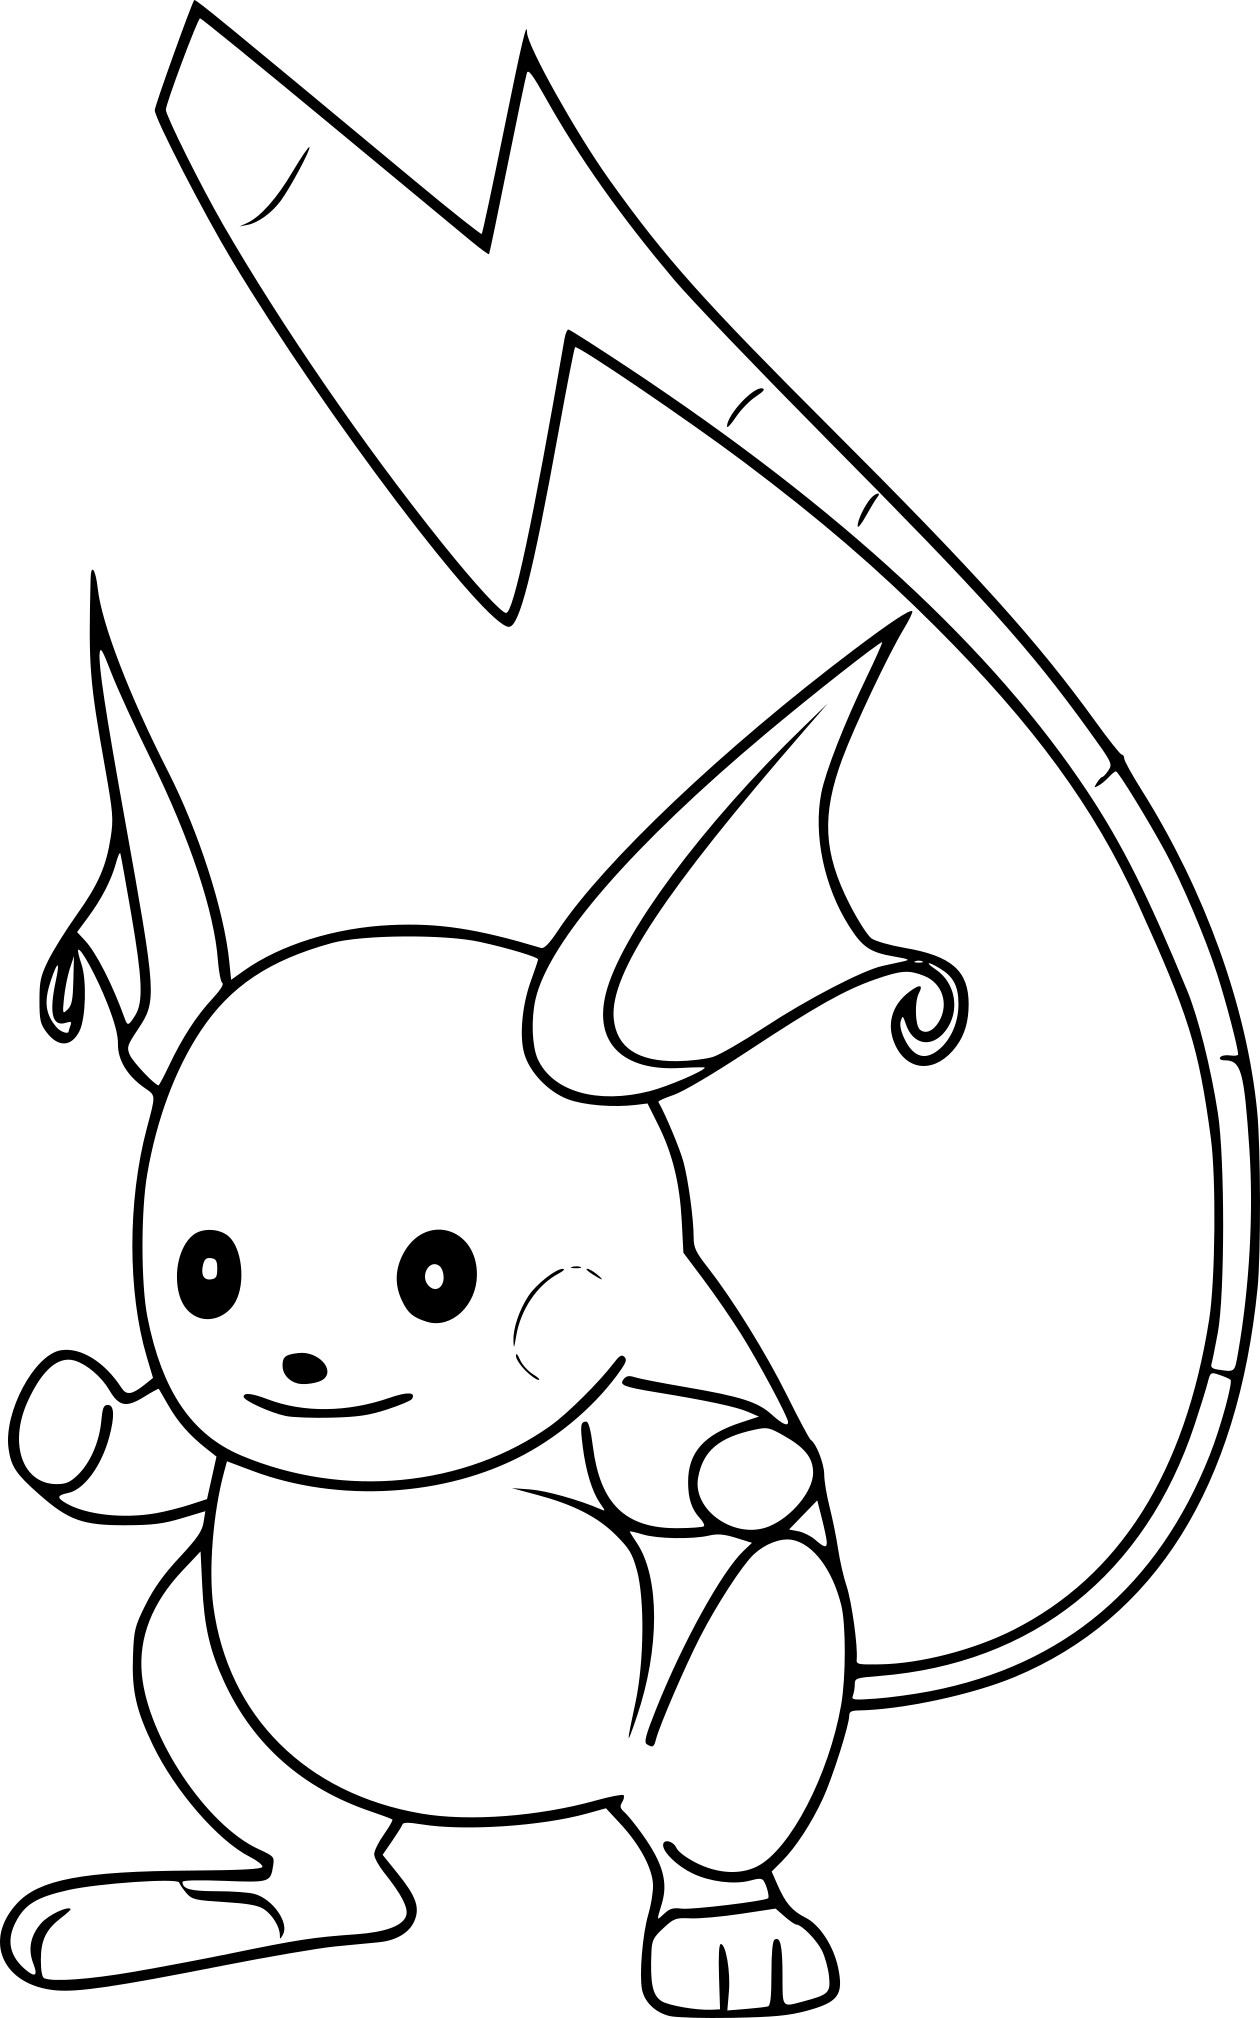 Raichu Pokemon Go coloring page